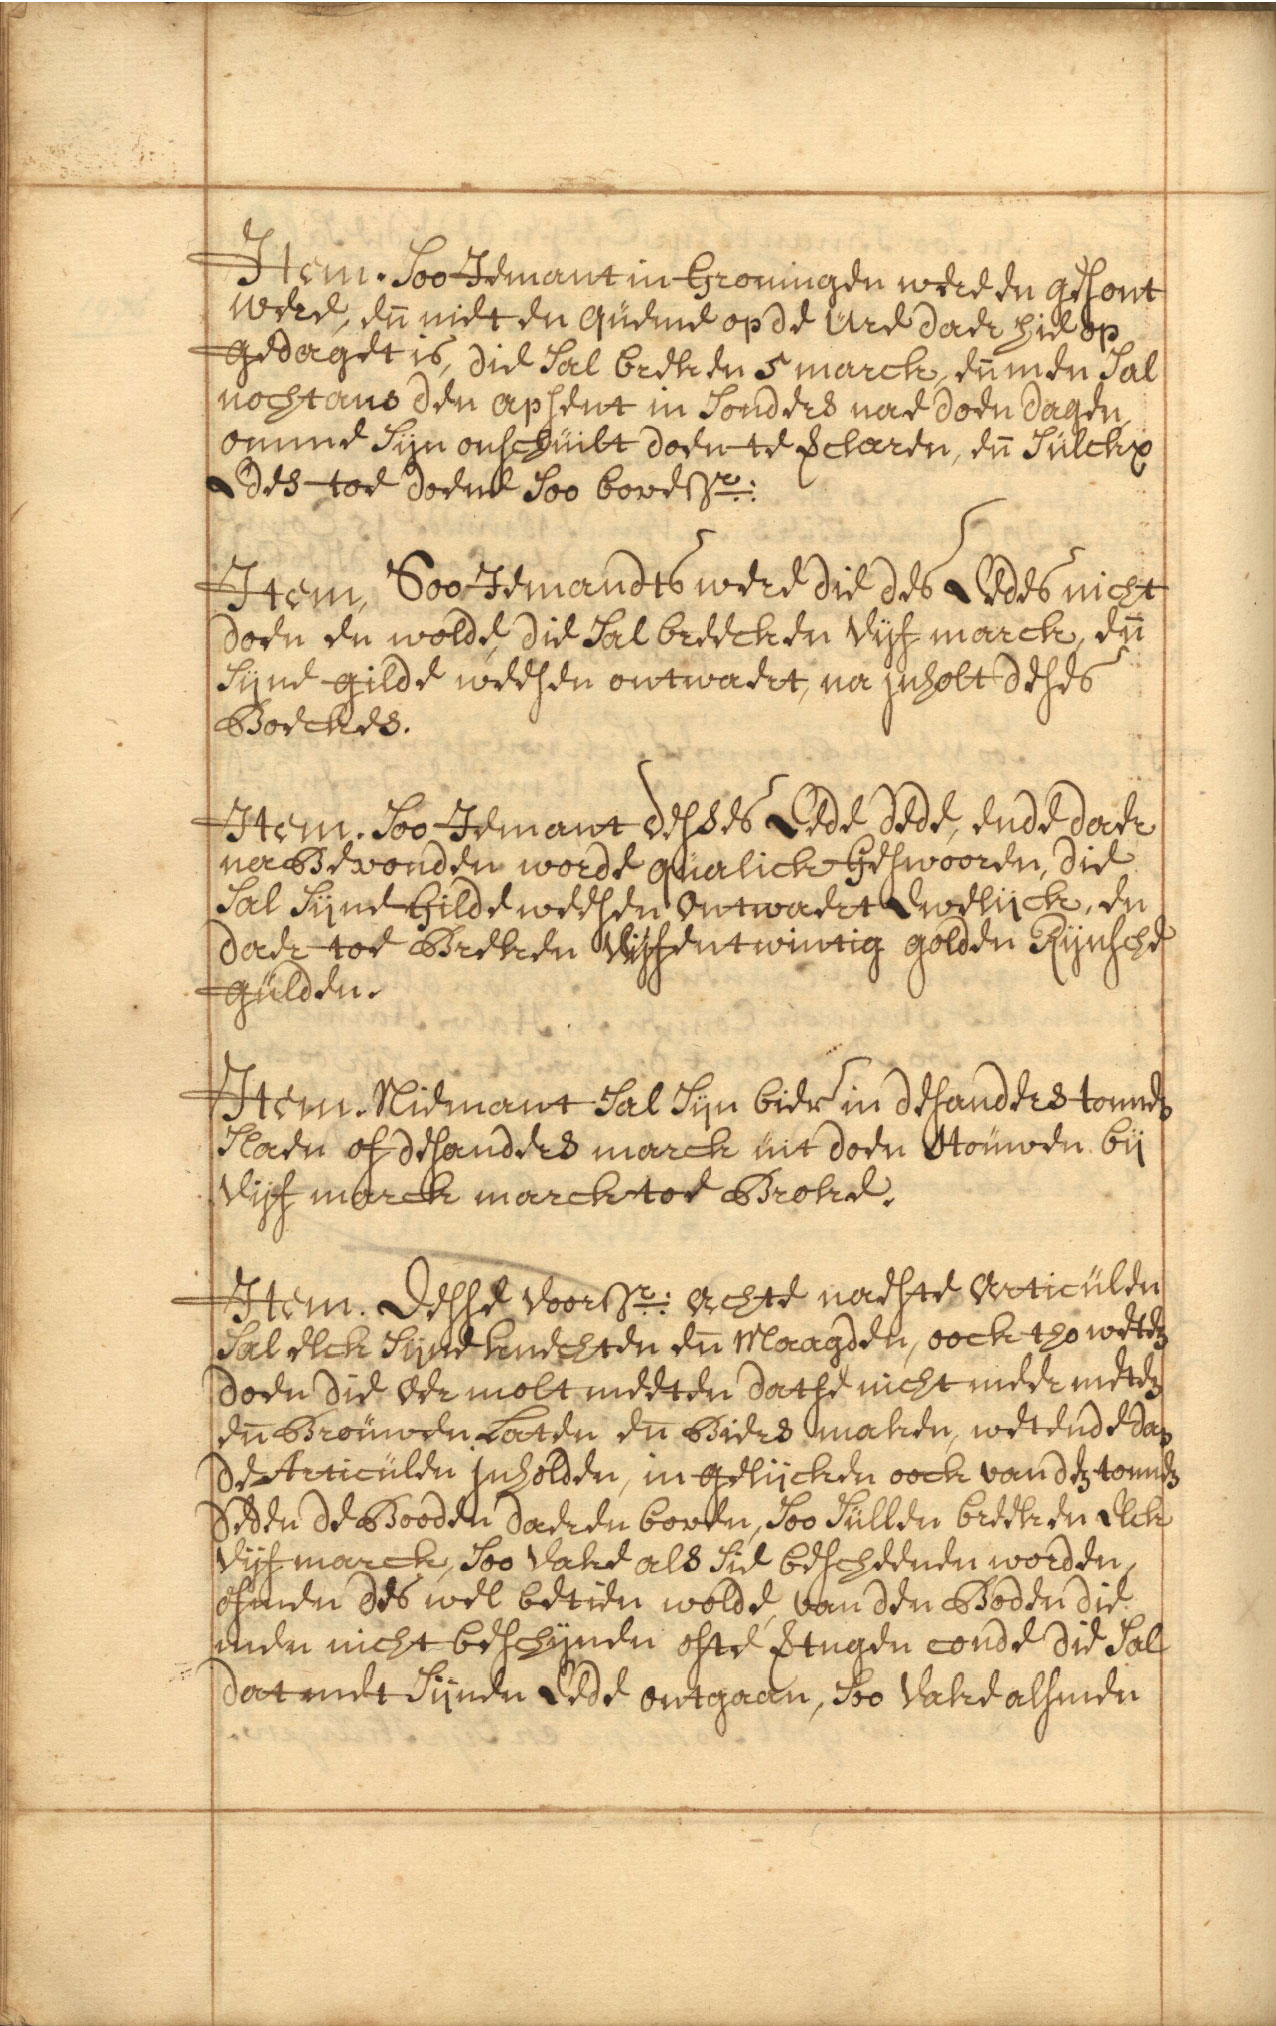 DIARIUM van EGBERT ALTING 1553 - 1594, Rijks Geschiedkundige Publicatiën, Grote serie 111
Dr. W.J. Formsma - Mr. R. Van Roijen. Nijhoff 1964 